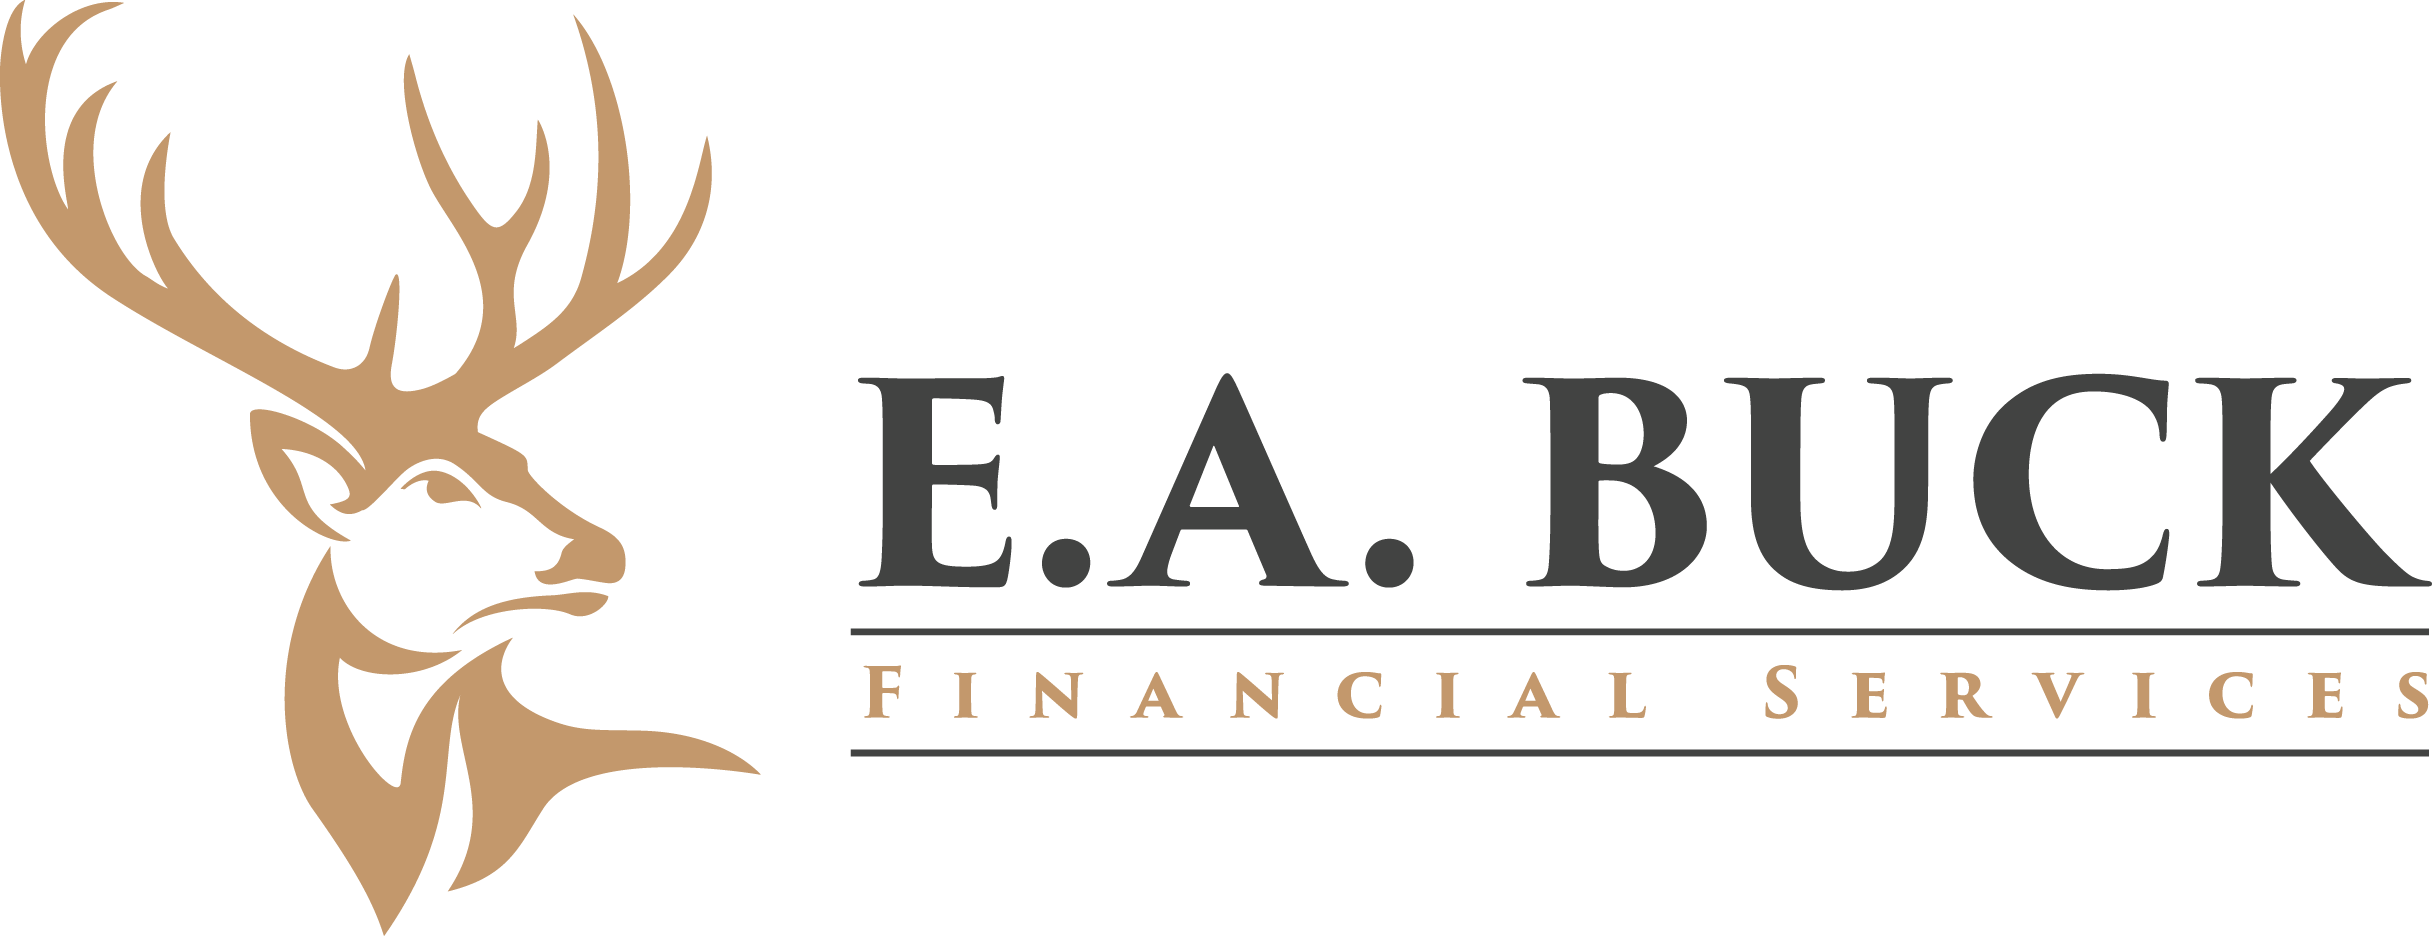 E.A. Buck Logo.png